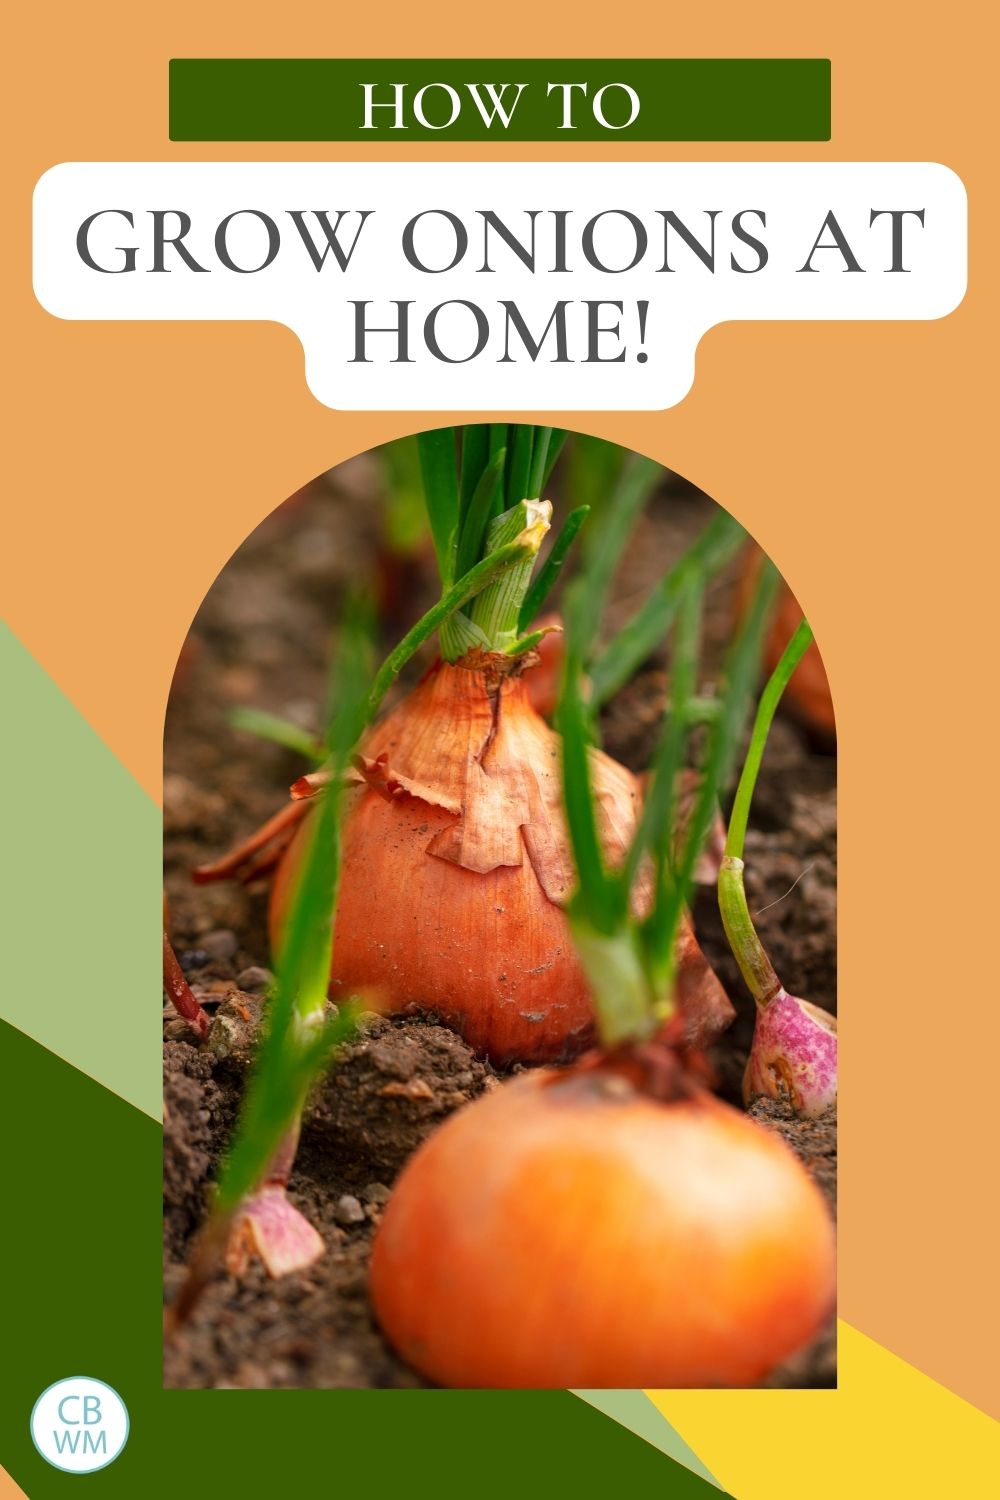 How to grow onions pinnable image